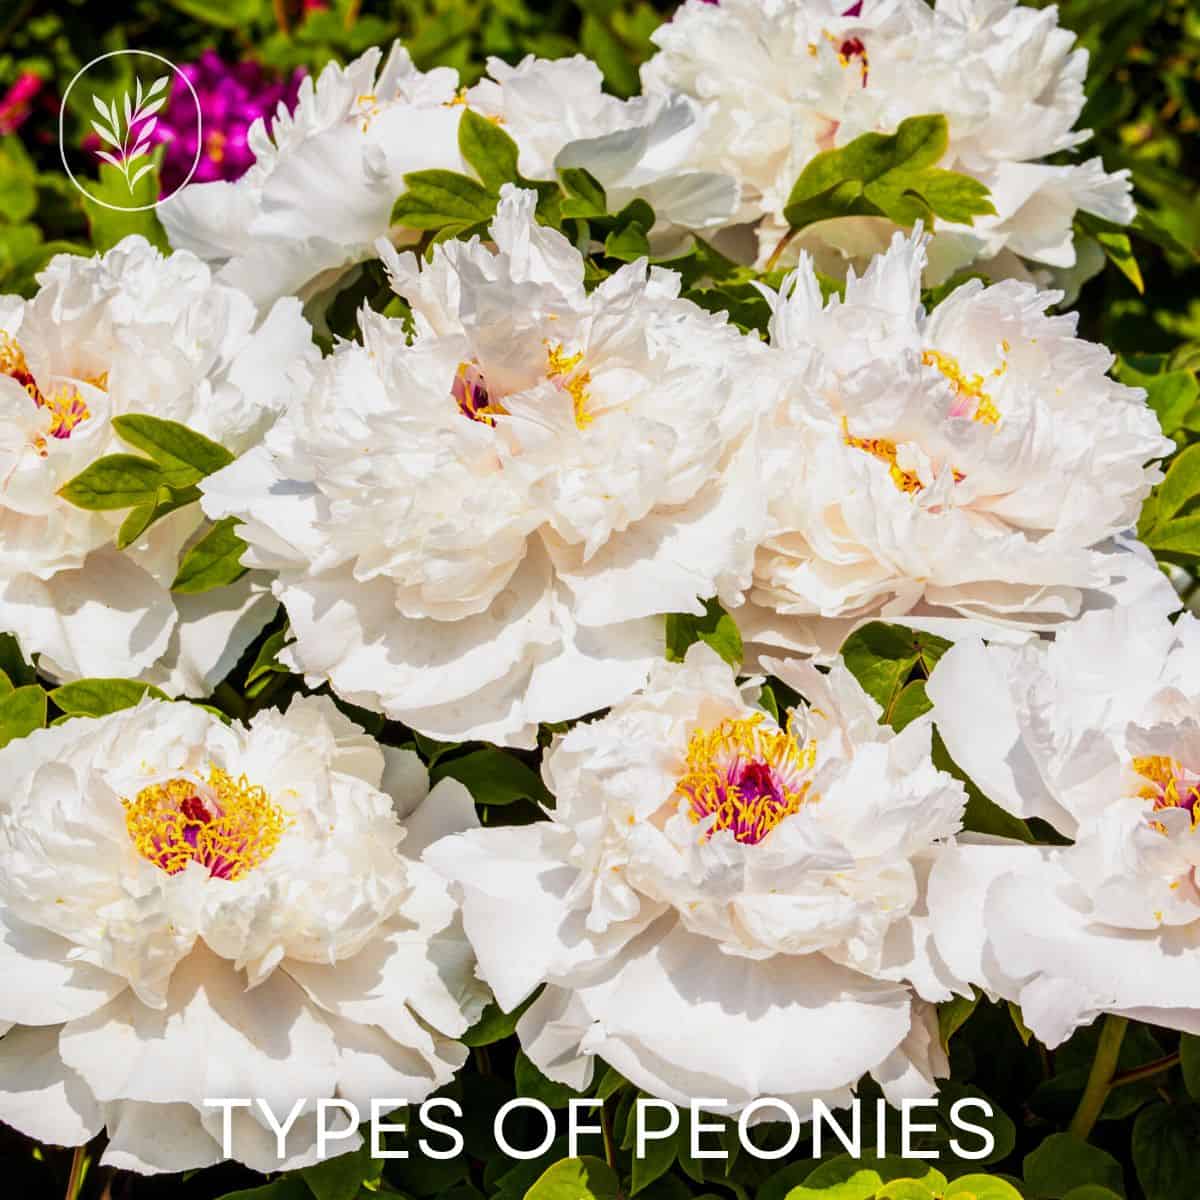 Types of peonies via @home4theharvest